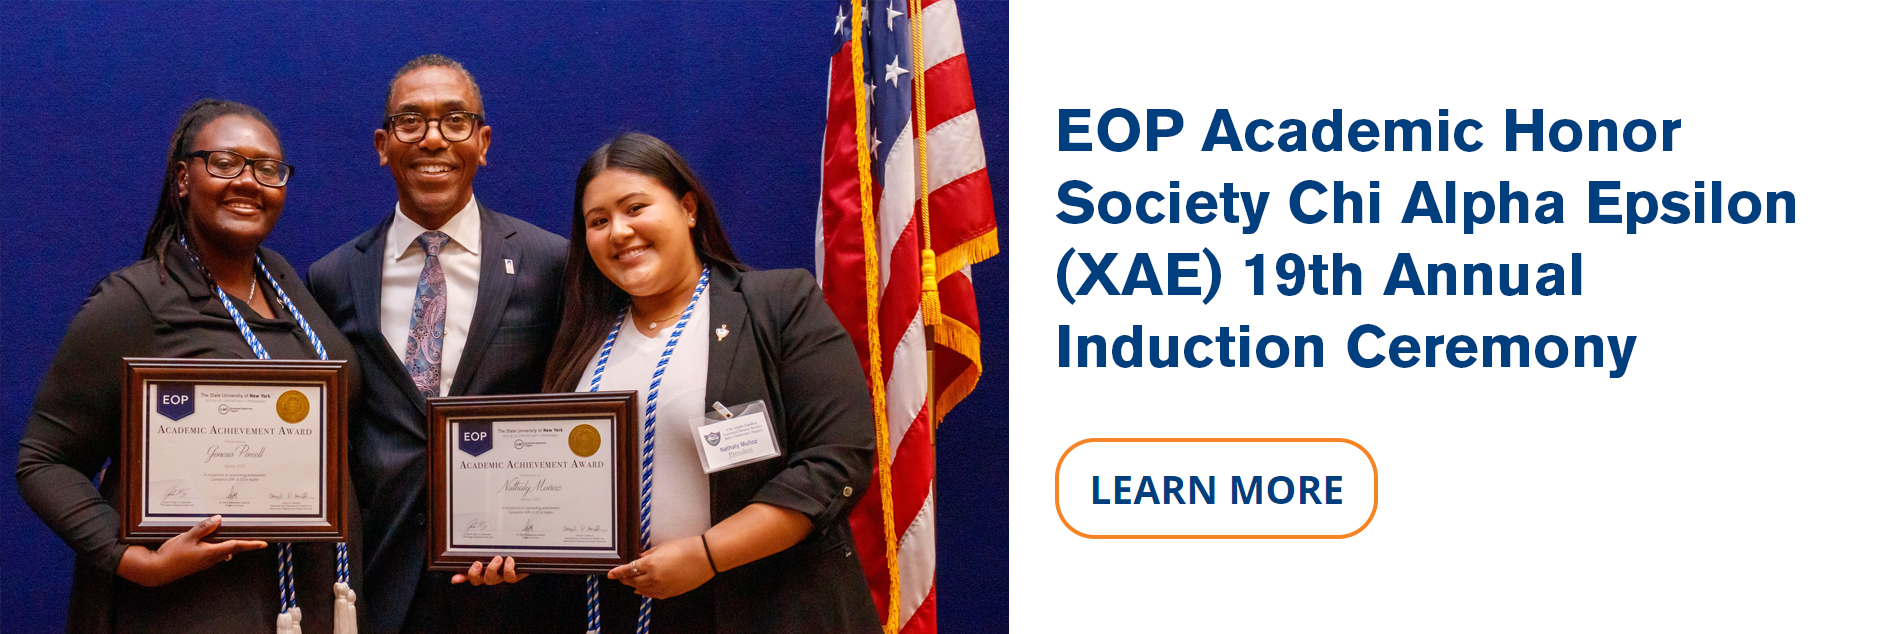 EOP Academic Honor Society Chi Alpha Epsilon (XAE) 19th Annual Induction Ceremony